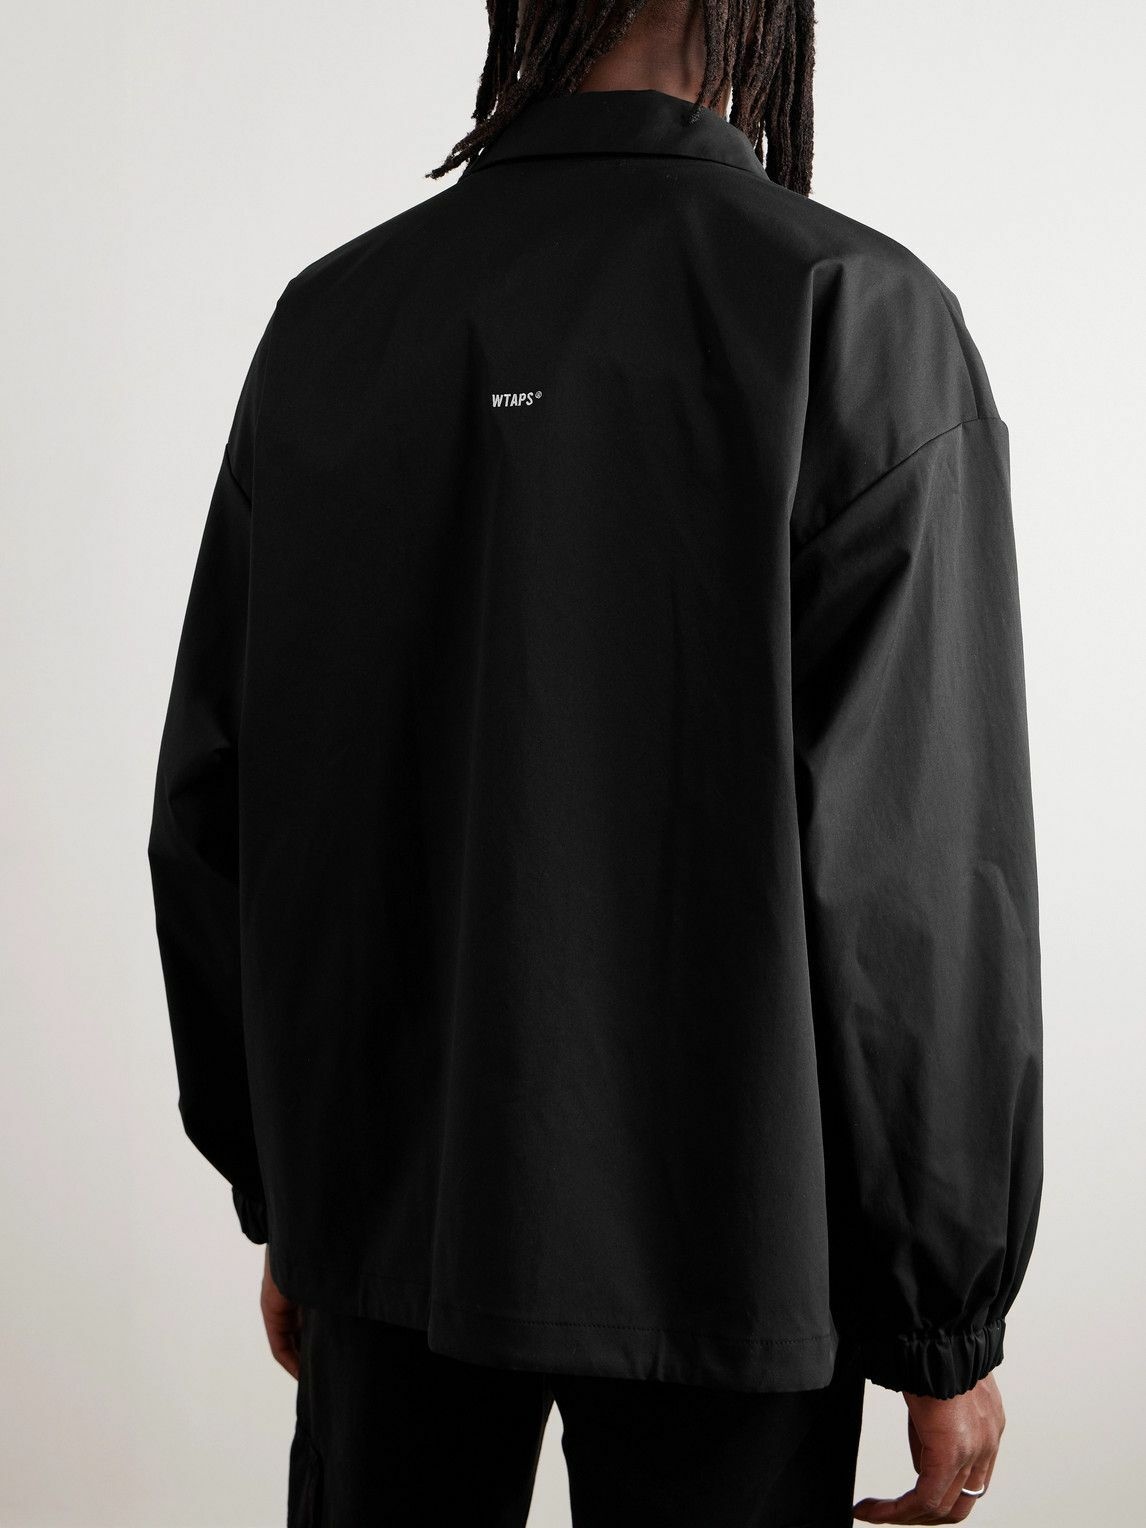 Wtaps jacket black size 02Wtapsonline購入